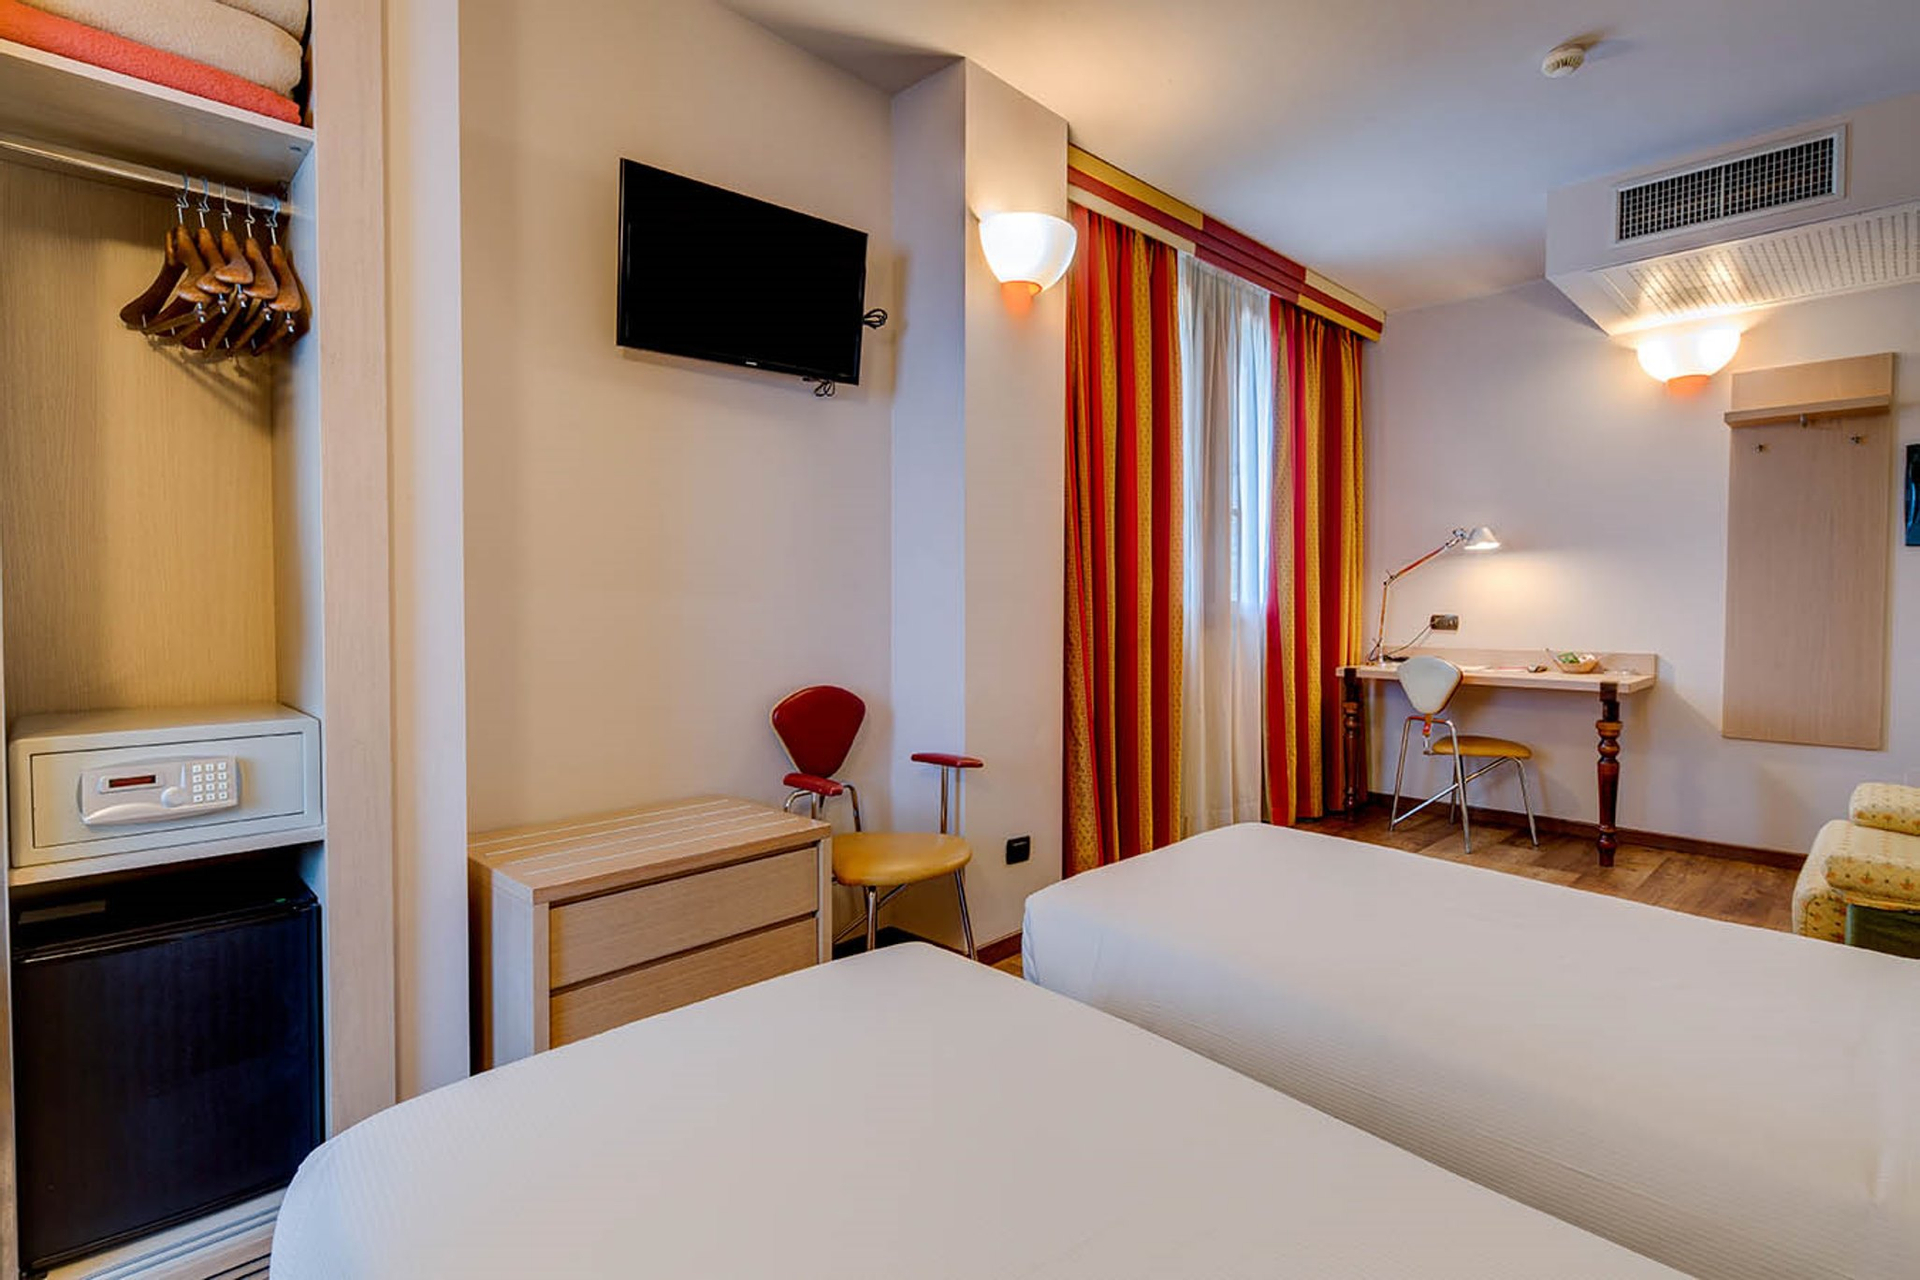 Bedroom 3, Art & Hotel Aeroporto, Bergamo